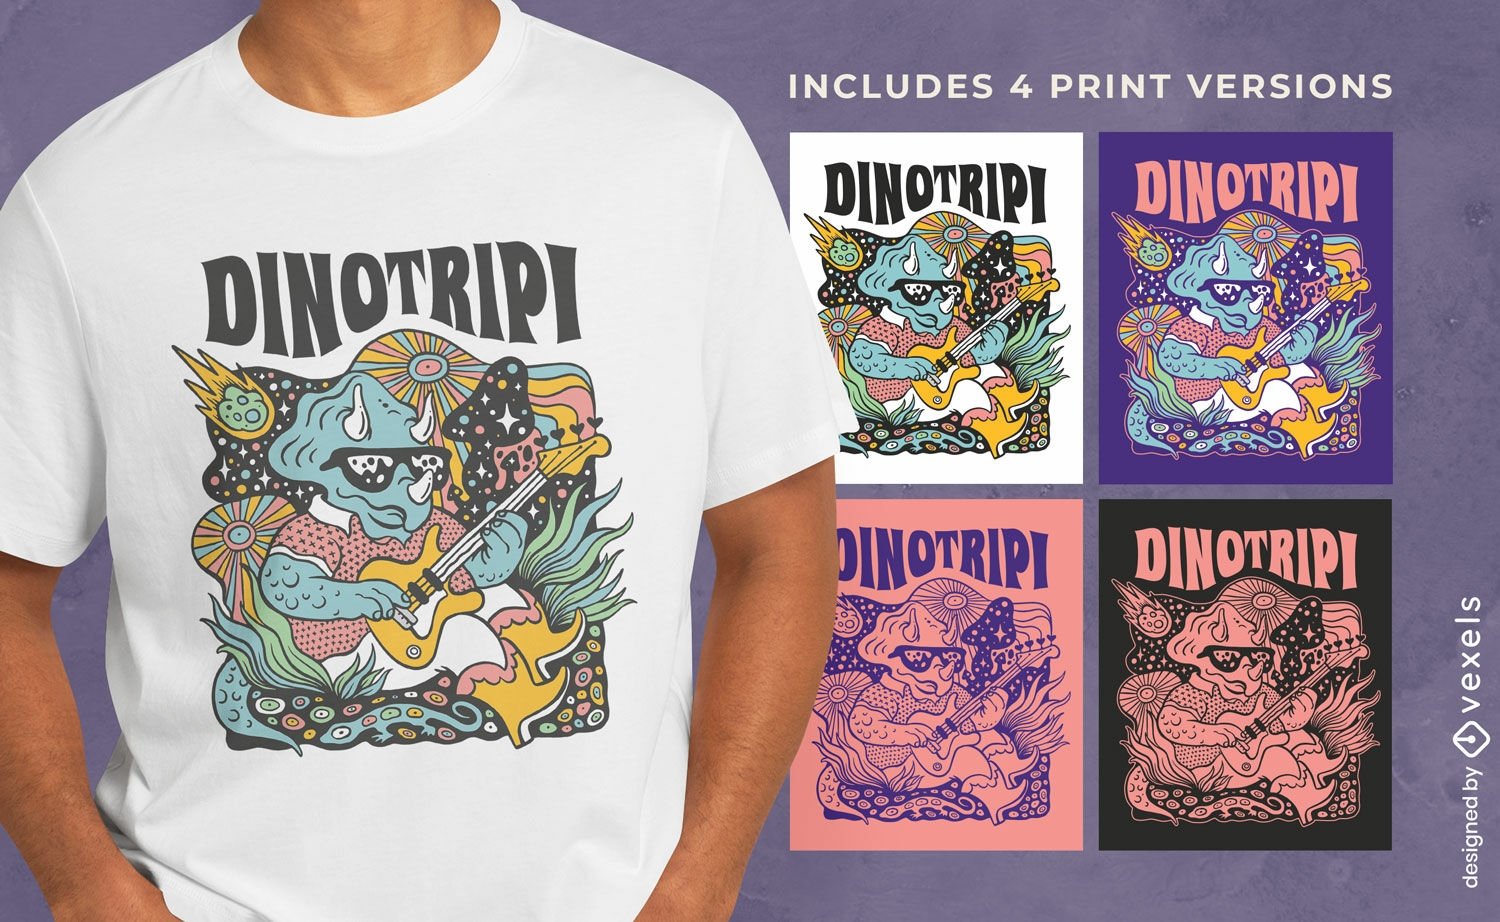 Diniosaur playing guitar t-shirt design multiple versions